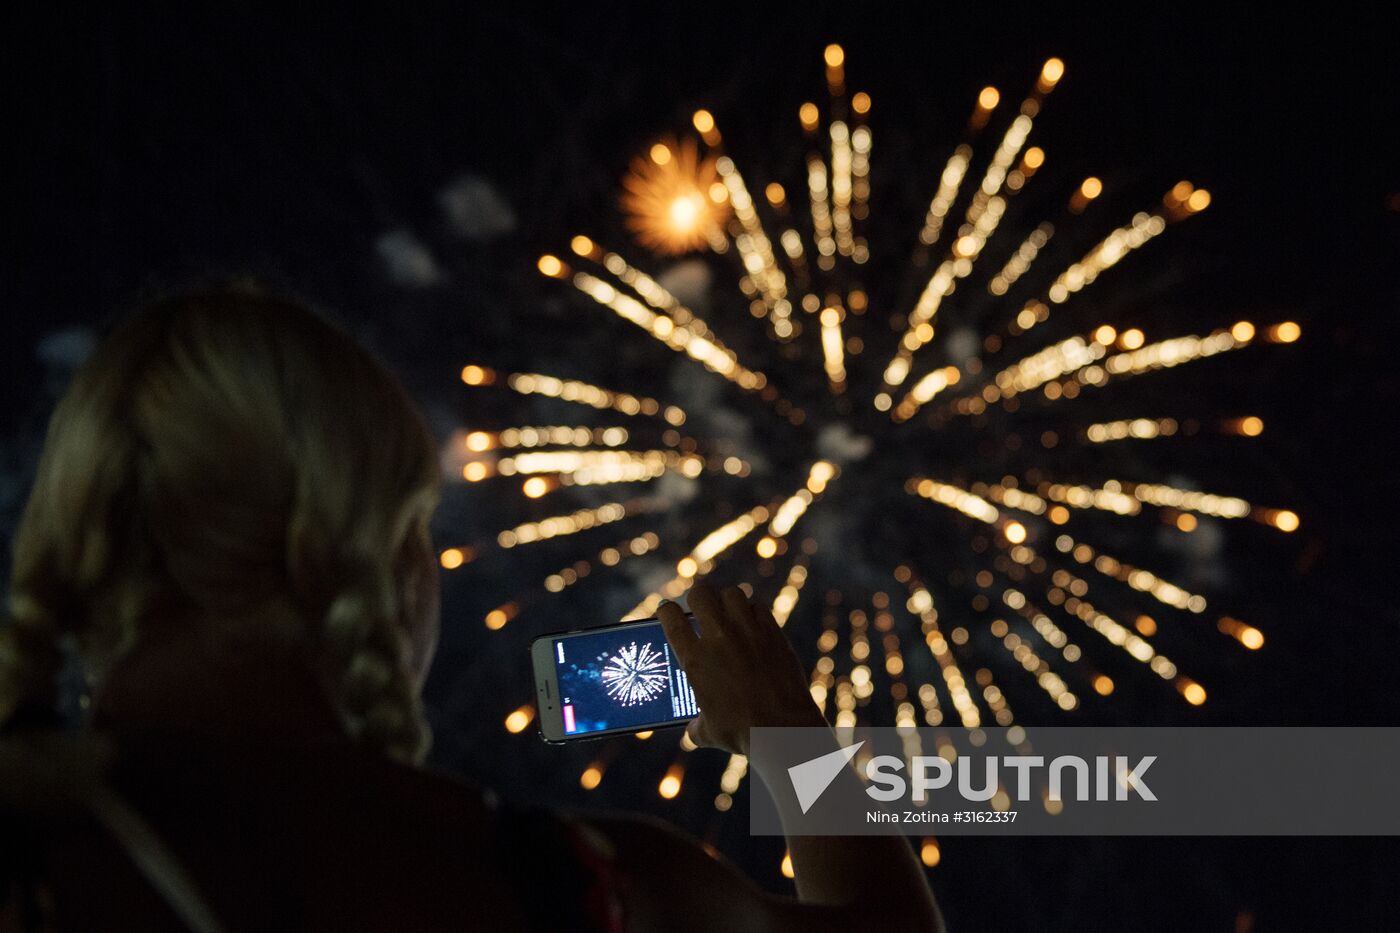 World Fireworks Championship qualifying stage in Sochi